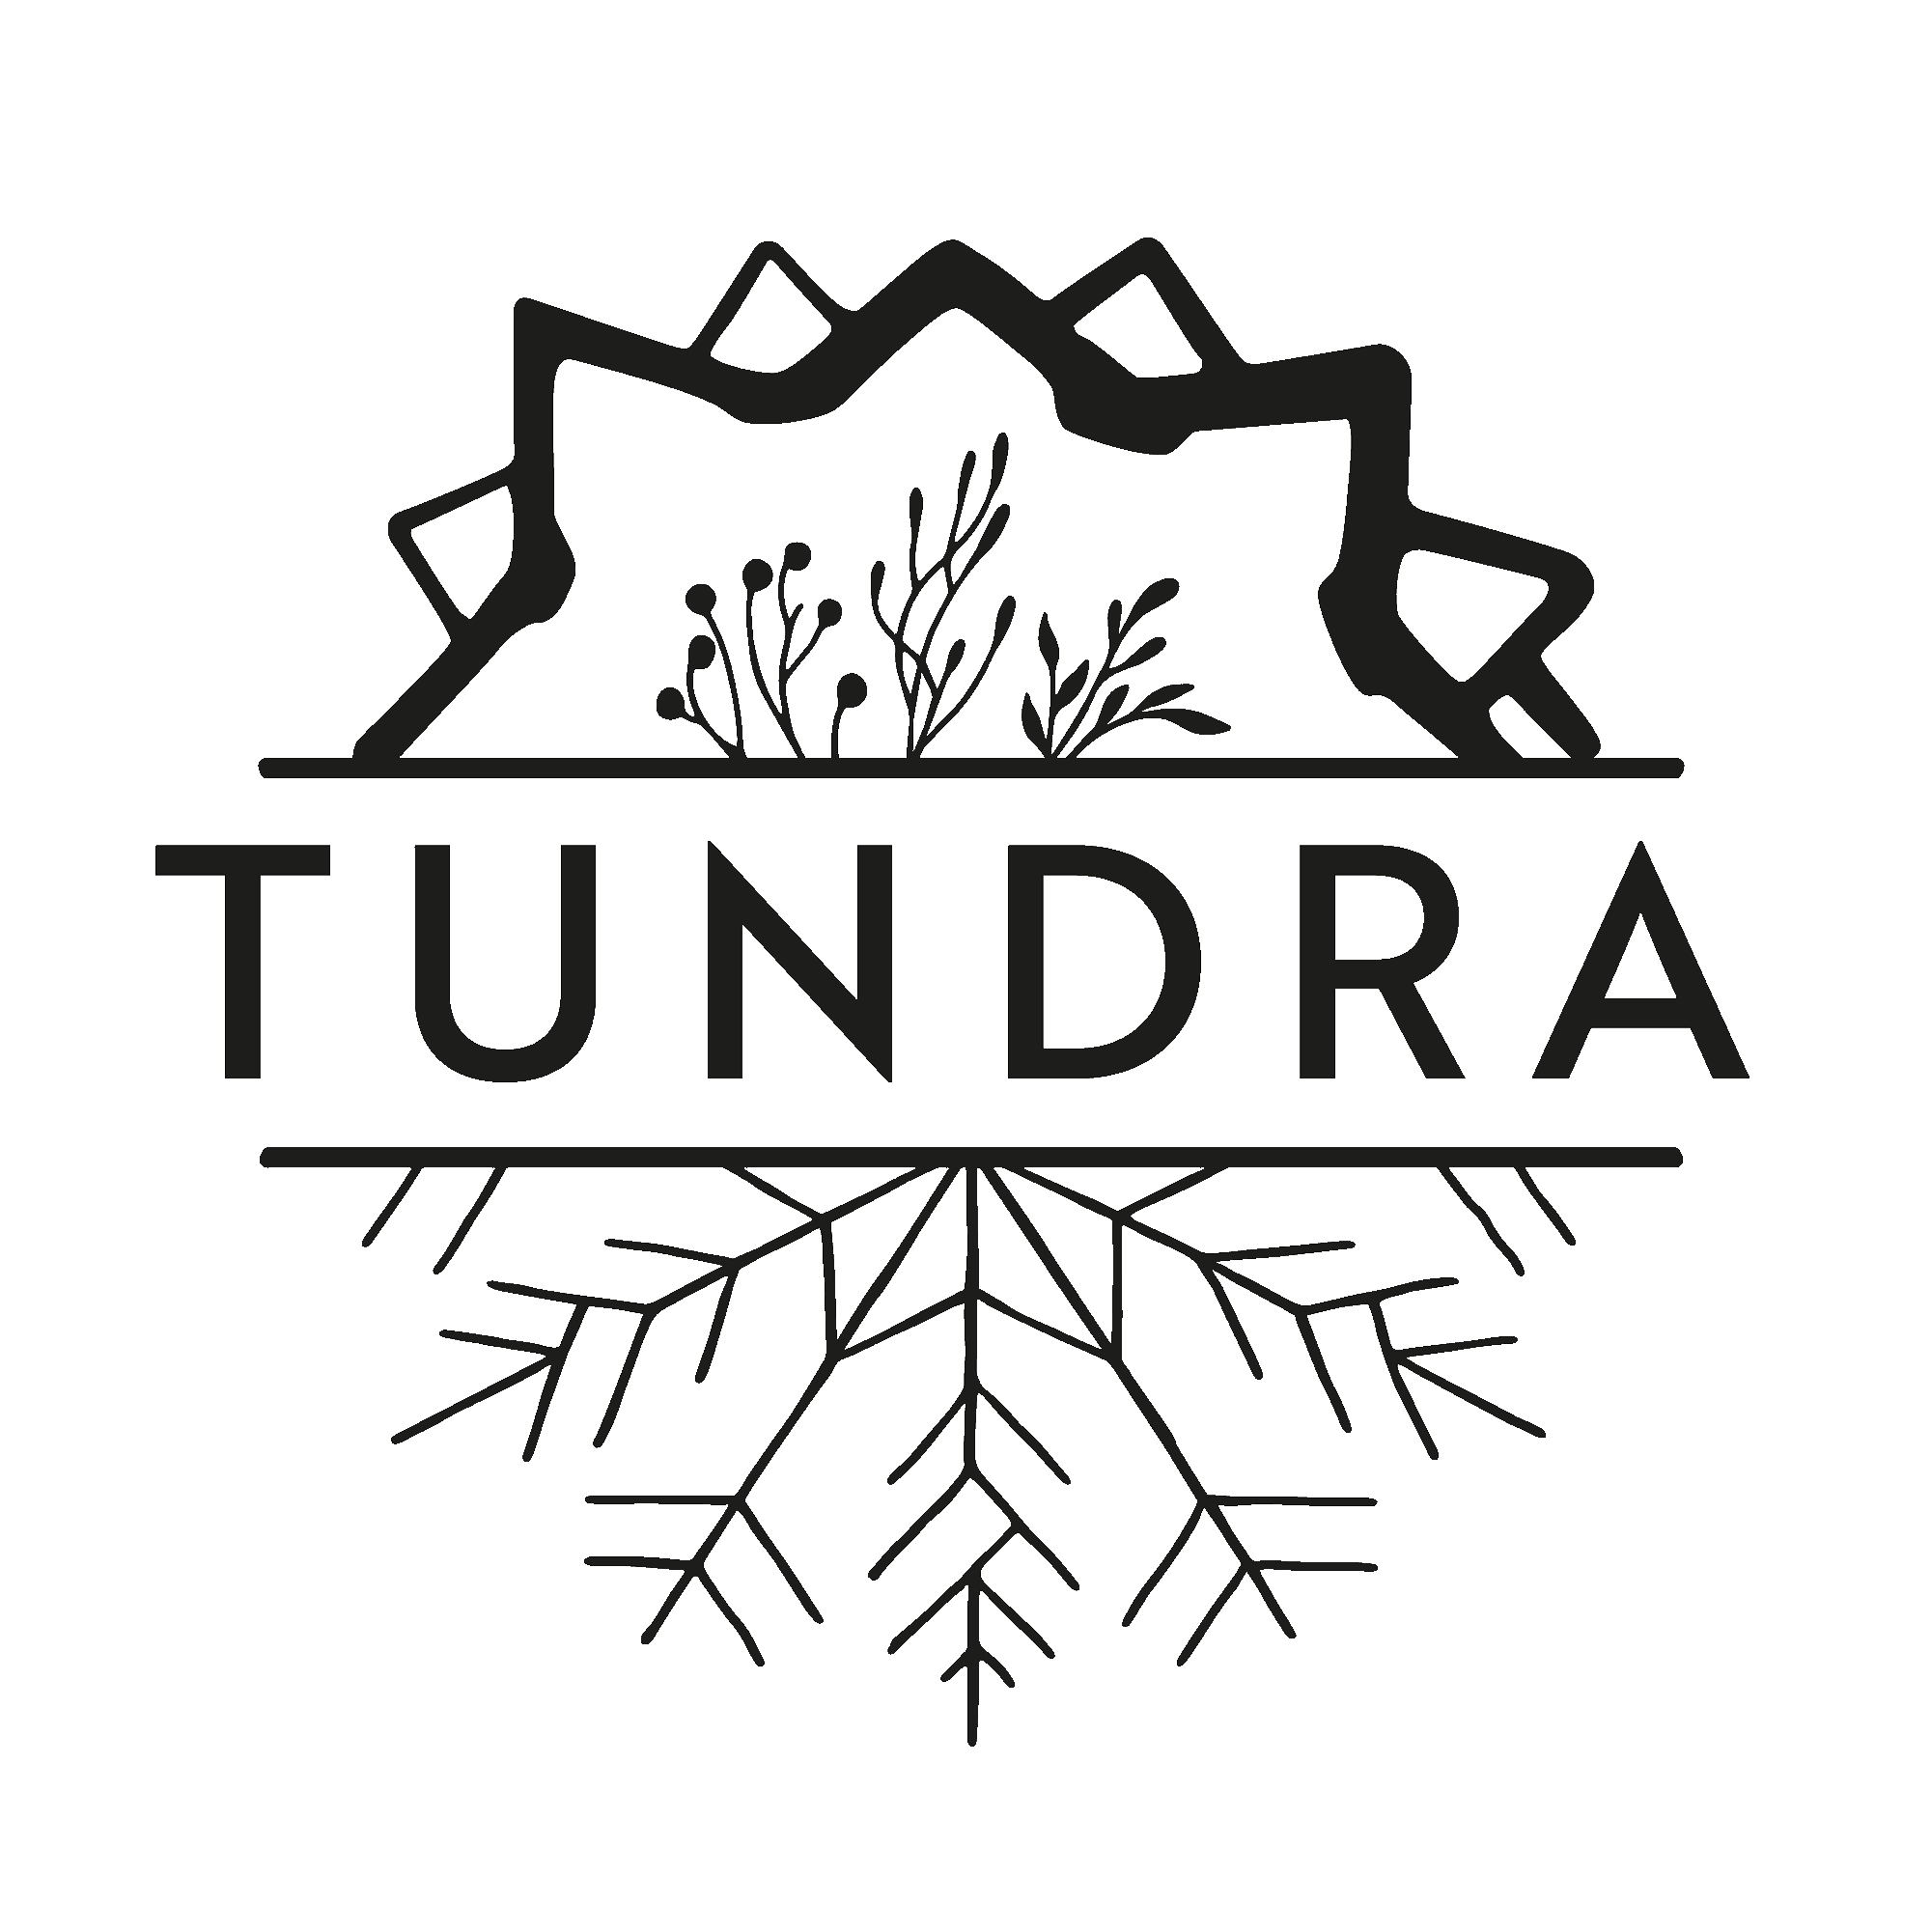 Tundralogo-sort.png